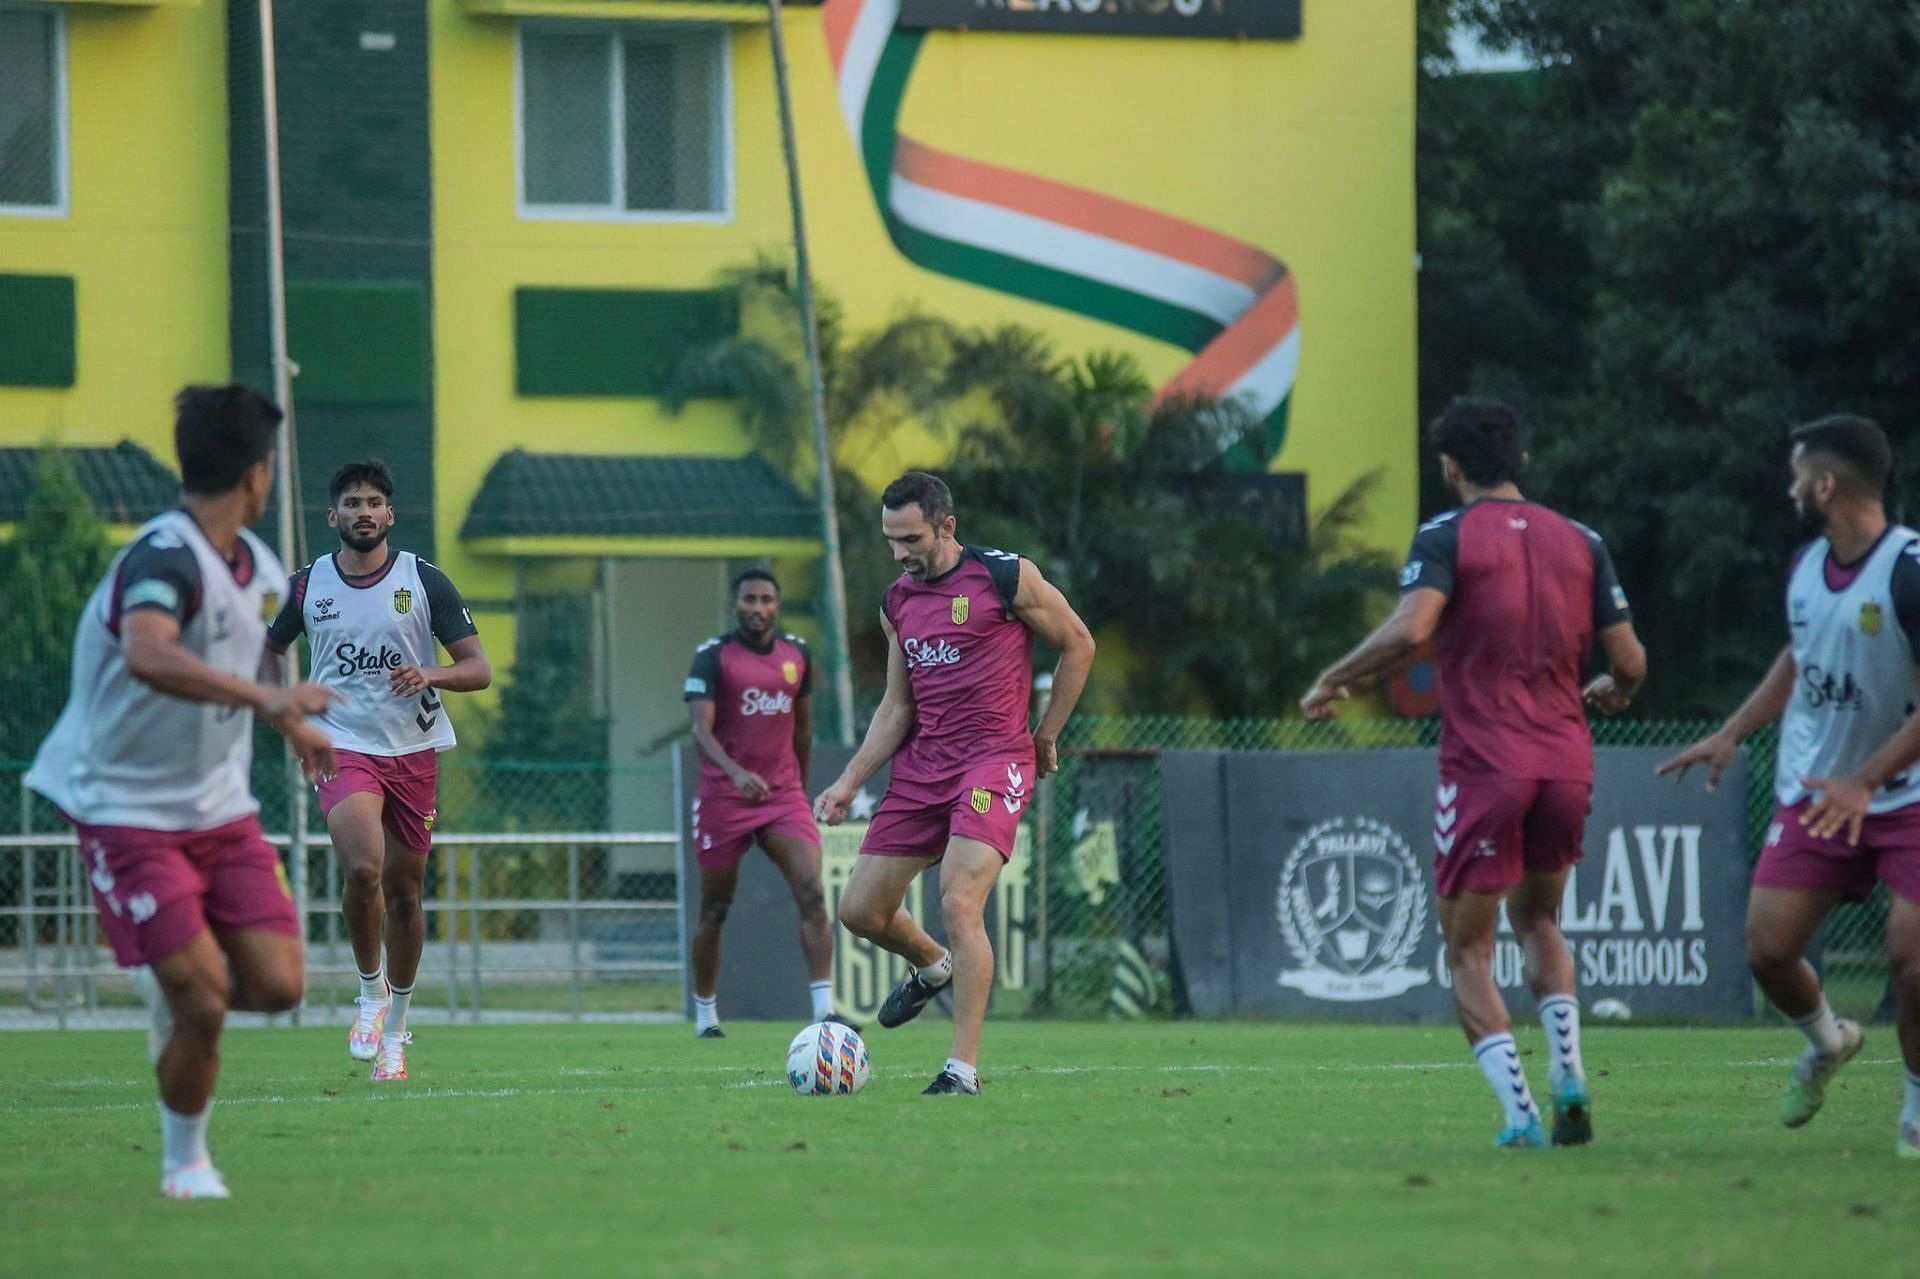 Hyderabad FC players preparing ahead of their clash against Mohun Bagan SG.